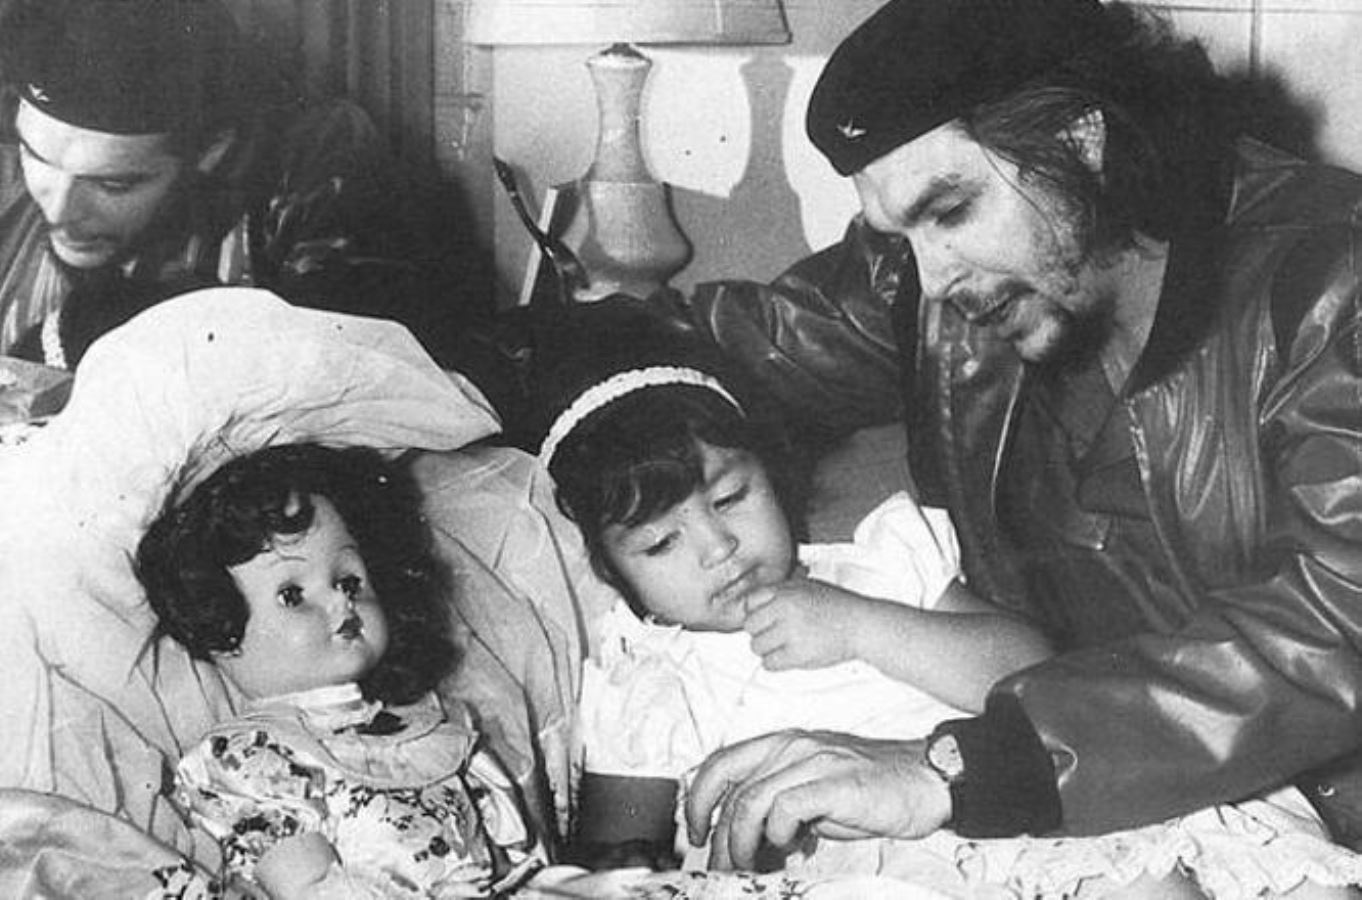 Devrimci hareketin sembol ismi: Che Guevara